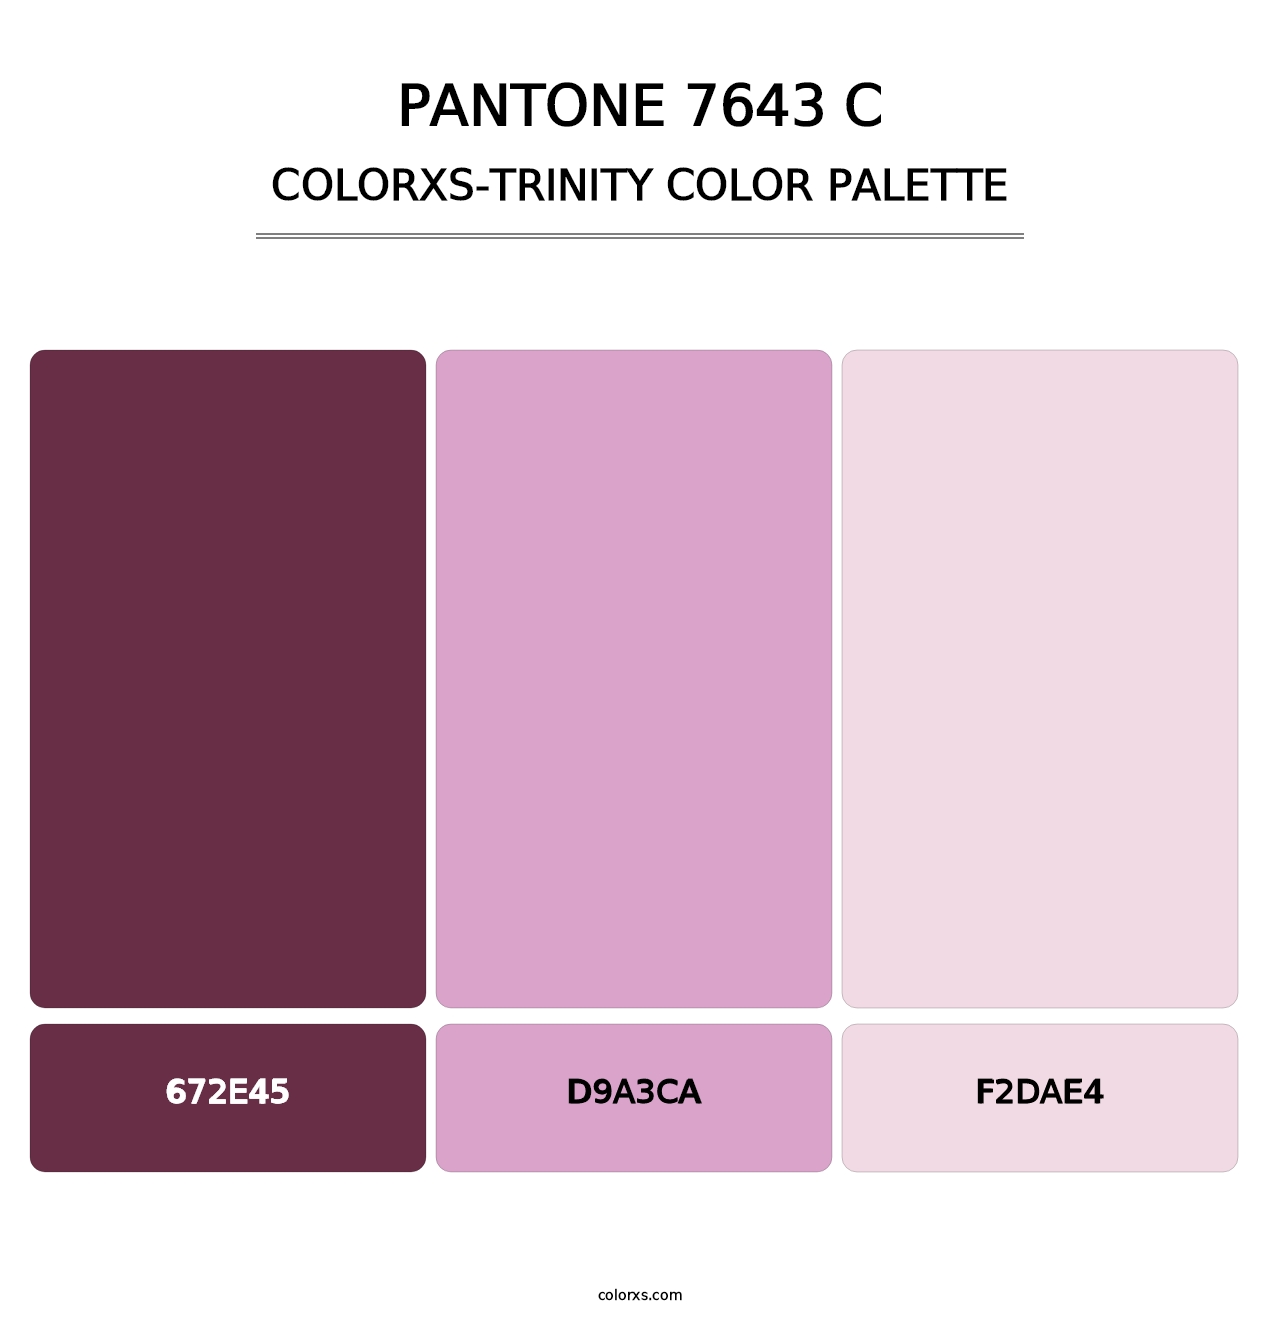 PANTONE 7643 C - Colorxs Trinity Palette